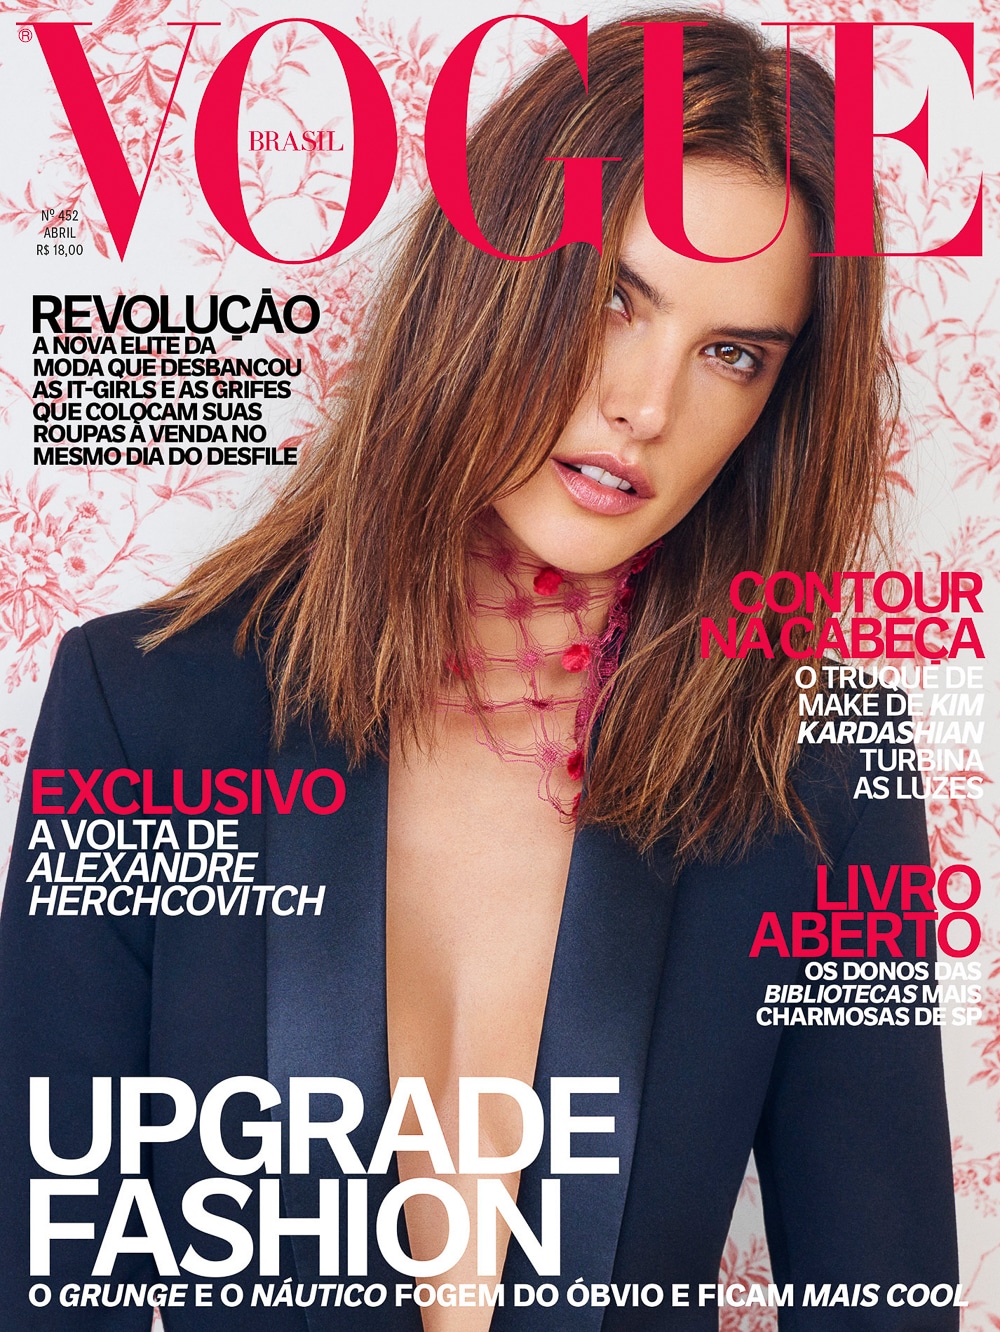 Vogue Brasil April 2016 Alessandra Ambrosio by Mariano Vivanco